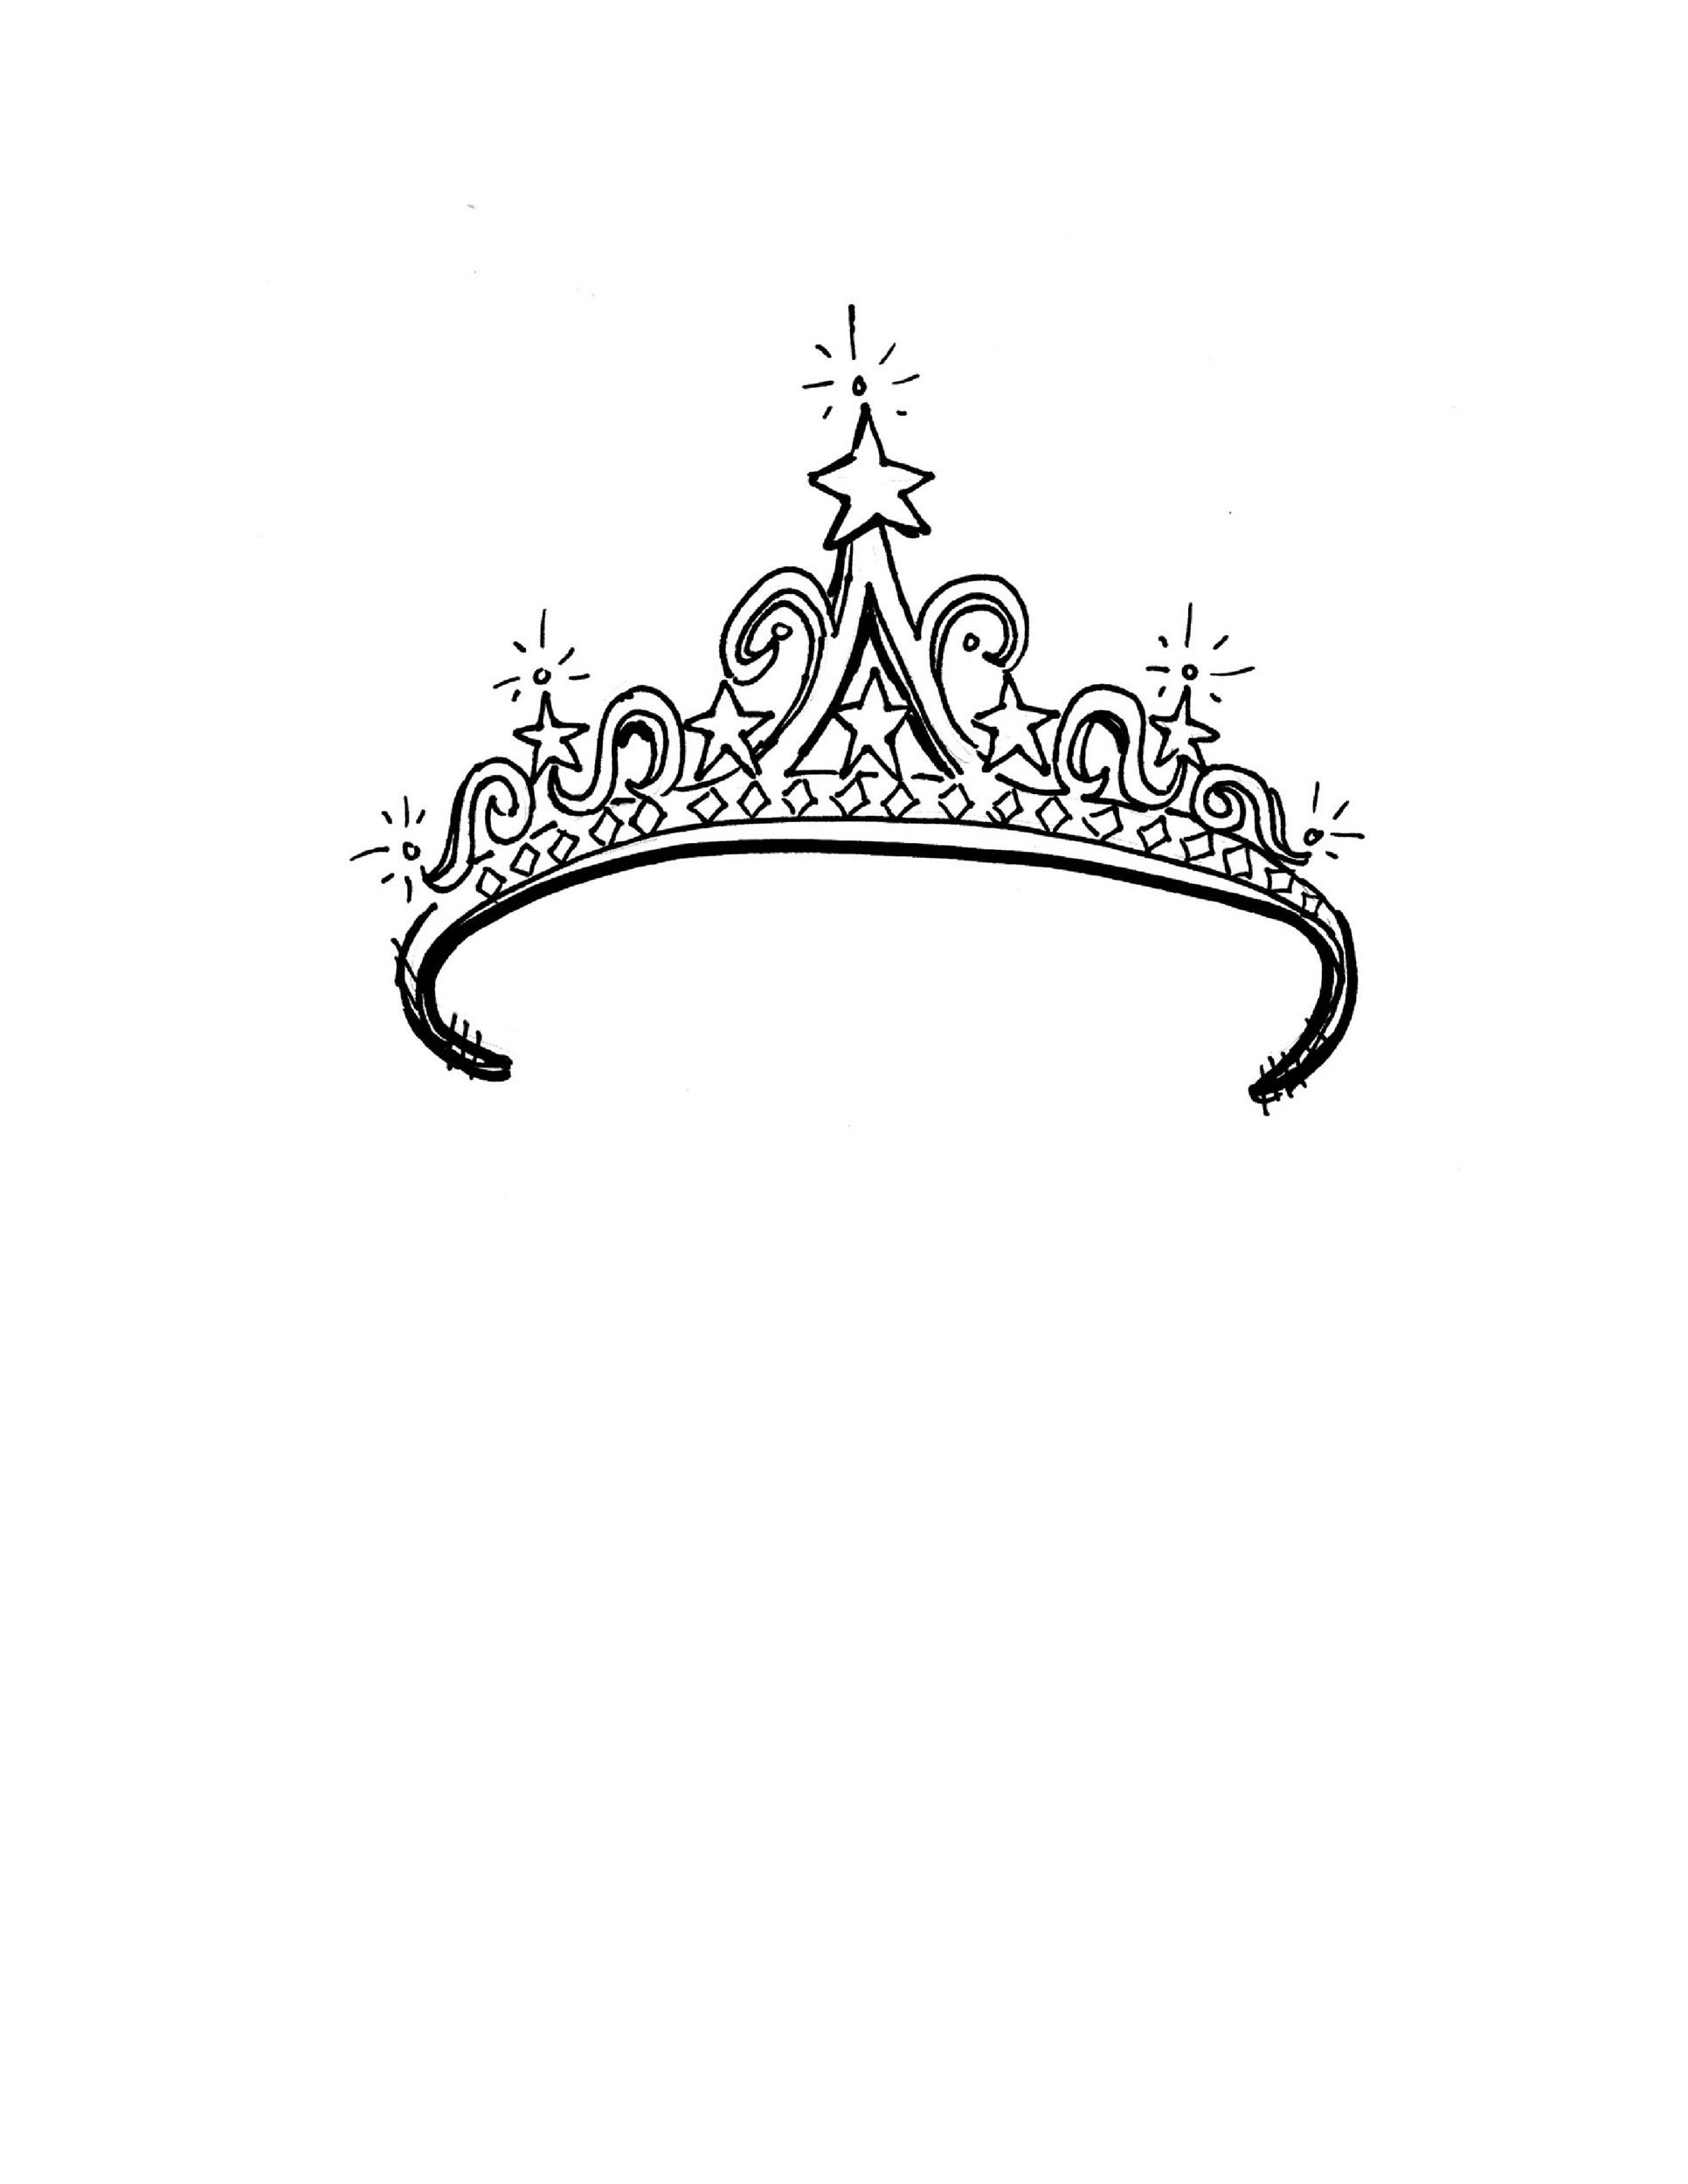 45 Free Paper Crown Templates ᐅ TemplateLab